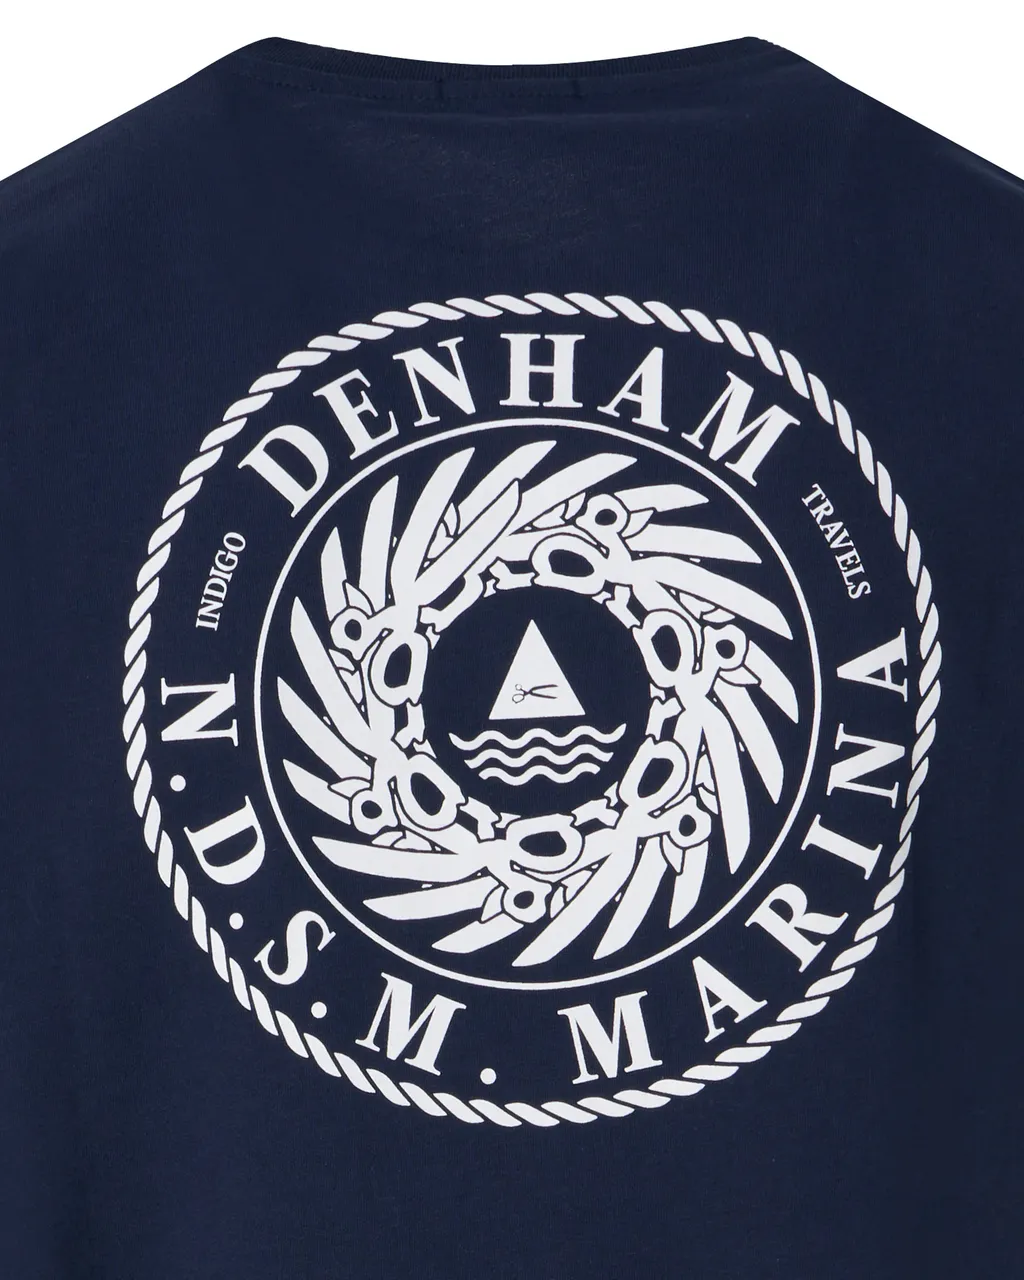 Denham Ndsm marina t-shirt met korte mouwen